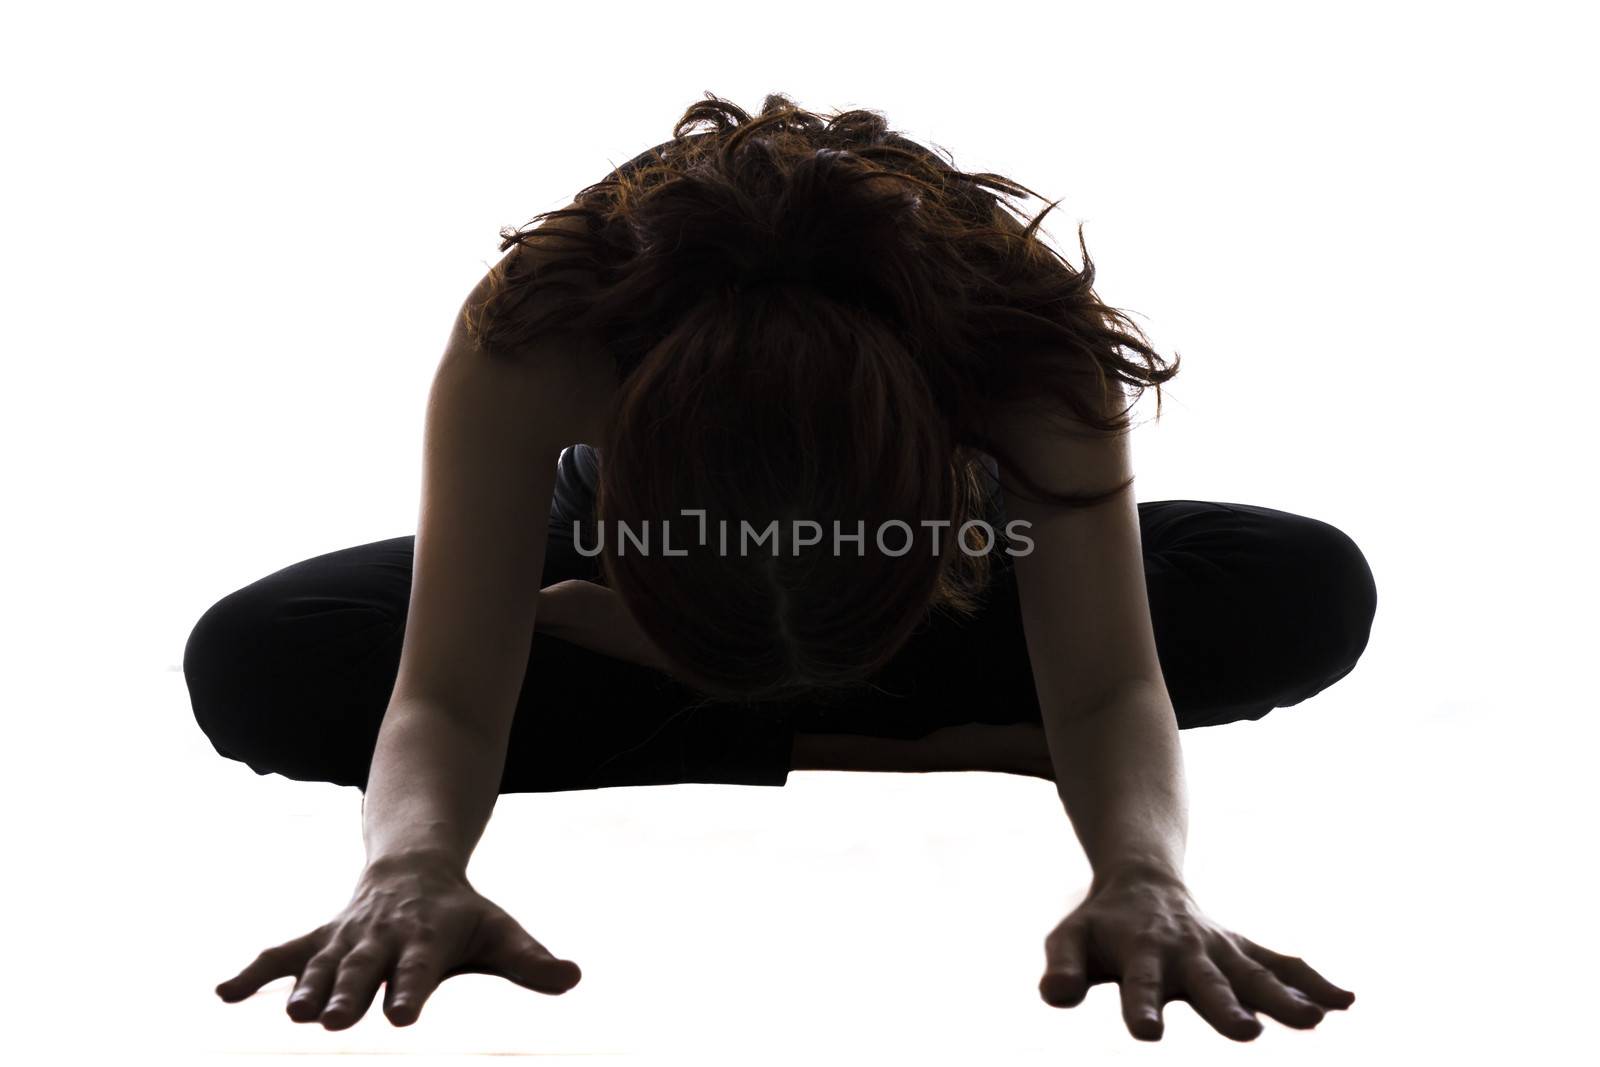 Woman in Bound Angle Pose or Baddha Konasana in Yoga in silhouet by snowwhite